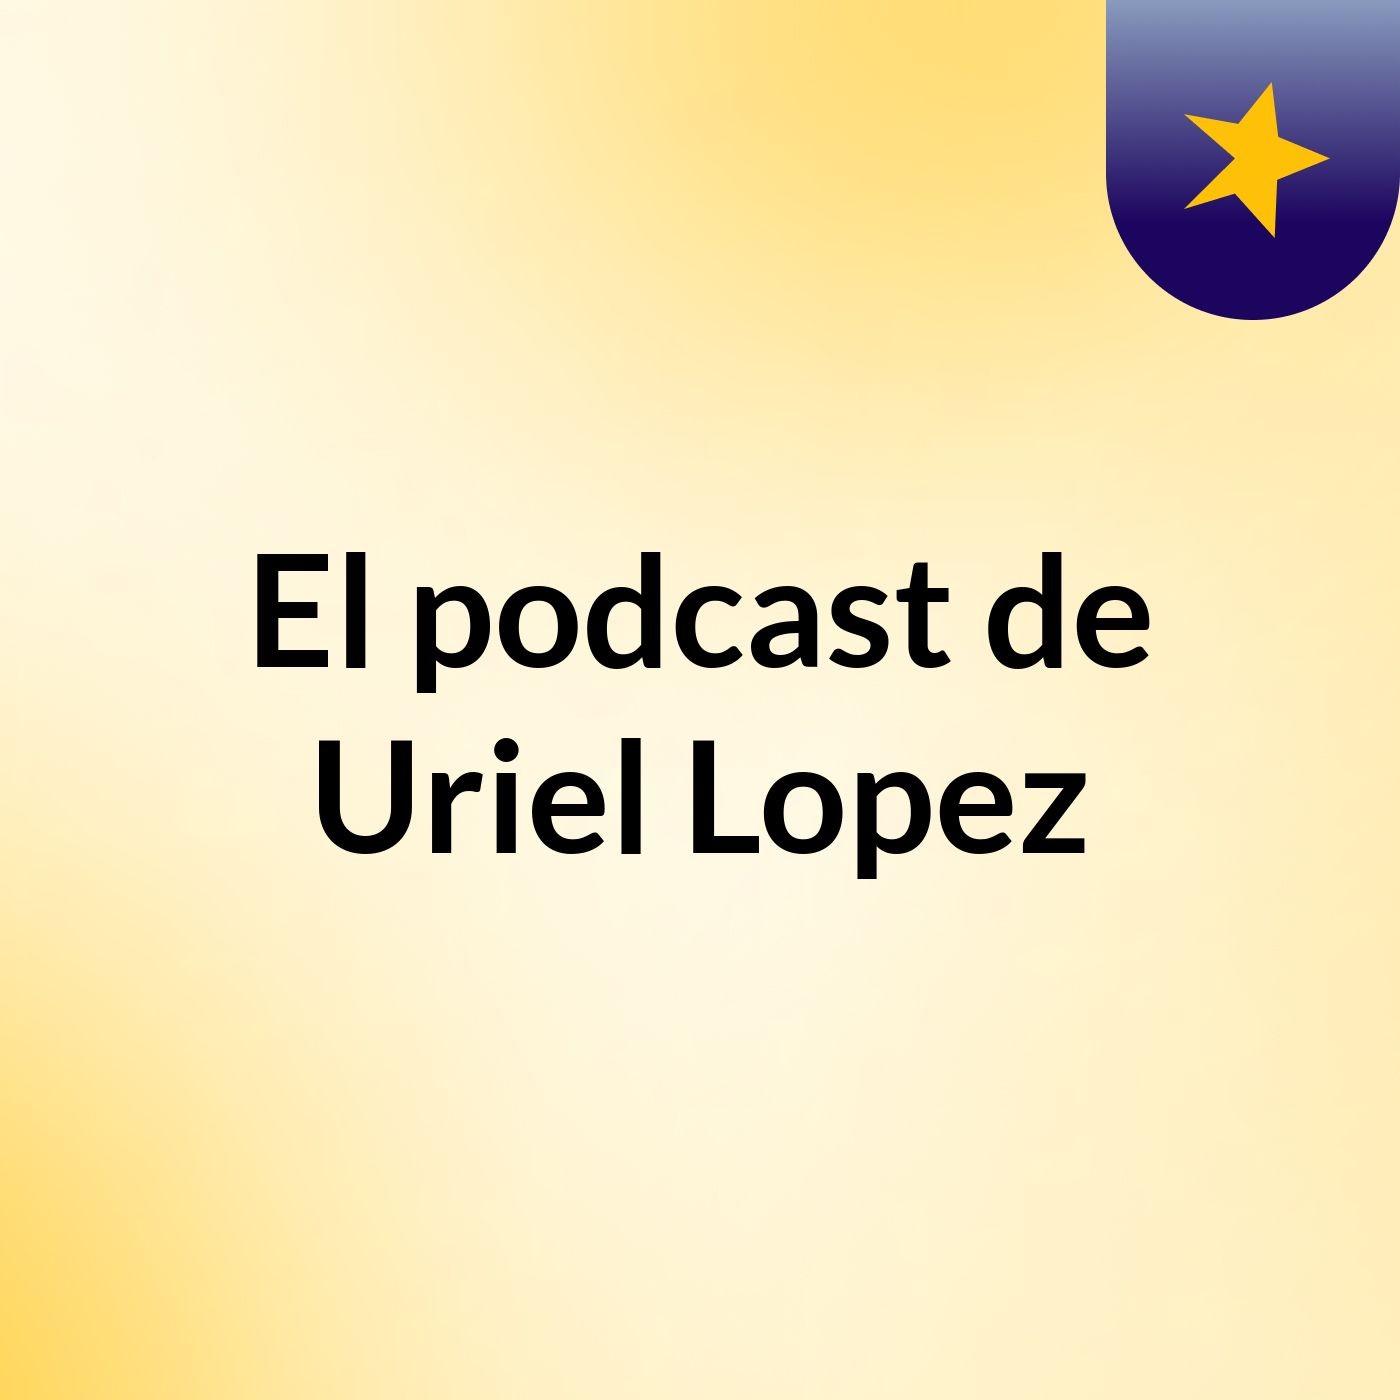 El podcast de Uriel Lopez